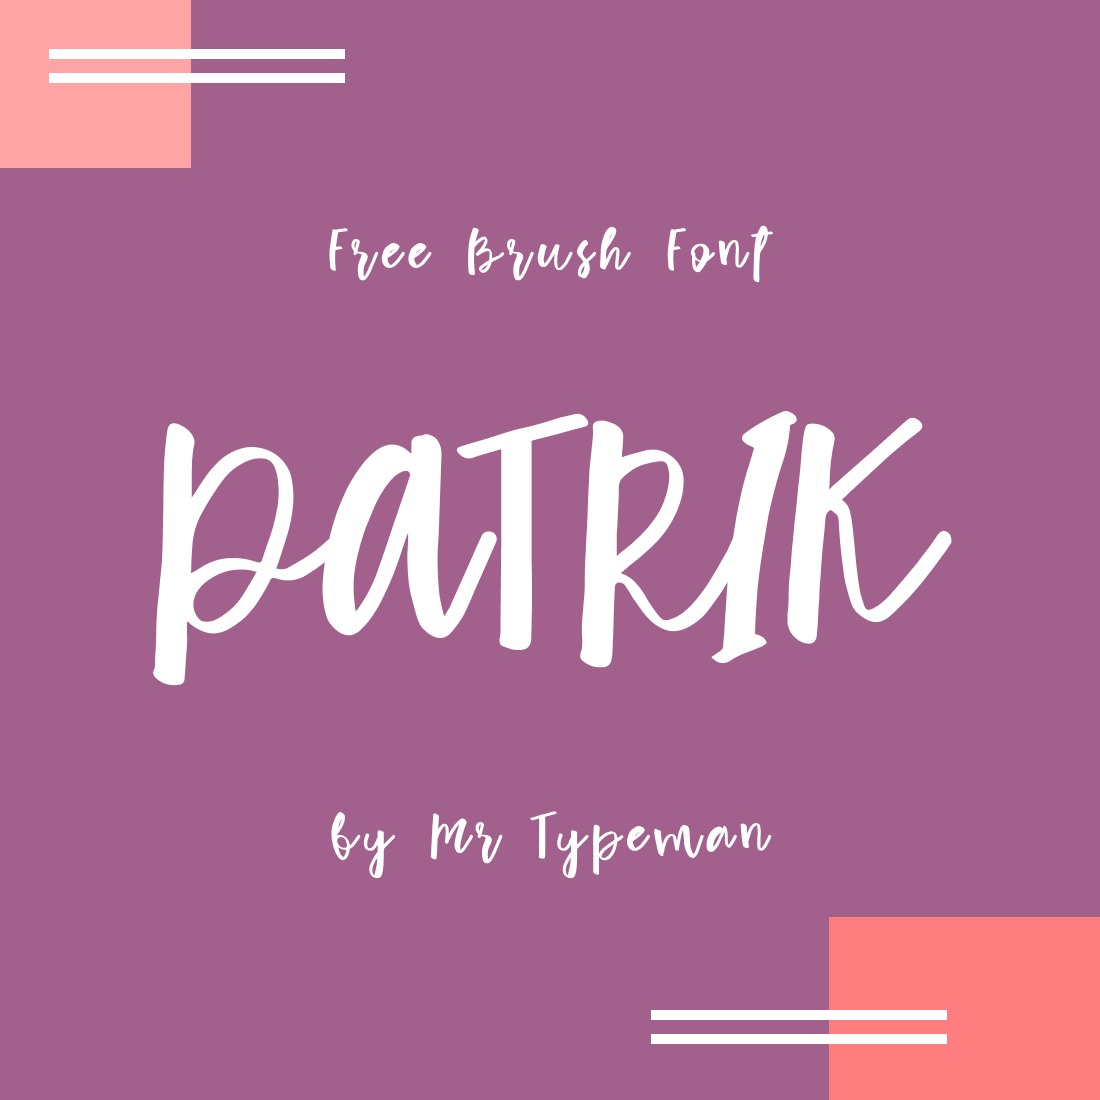 Free Green Patrik Font main cover by MasterBundles.